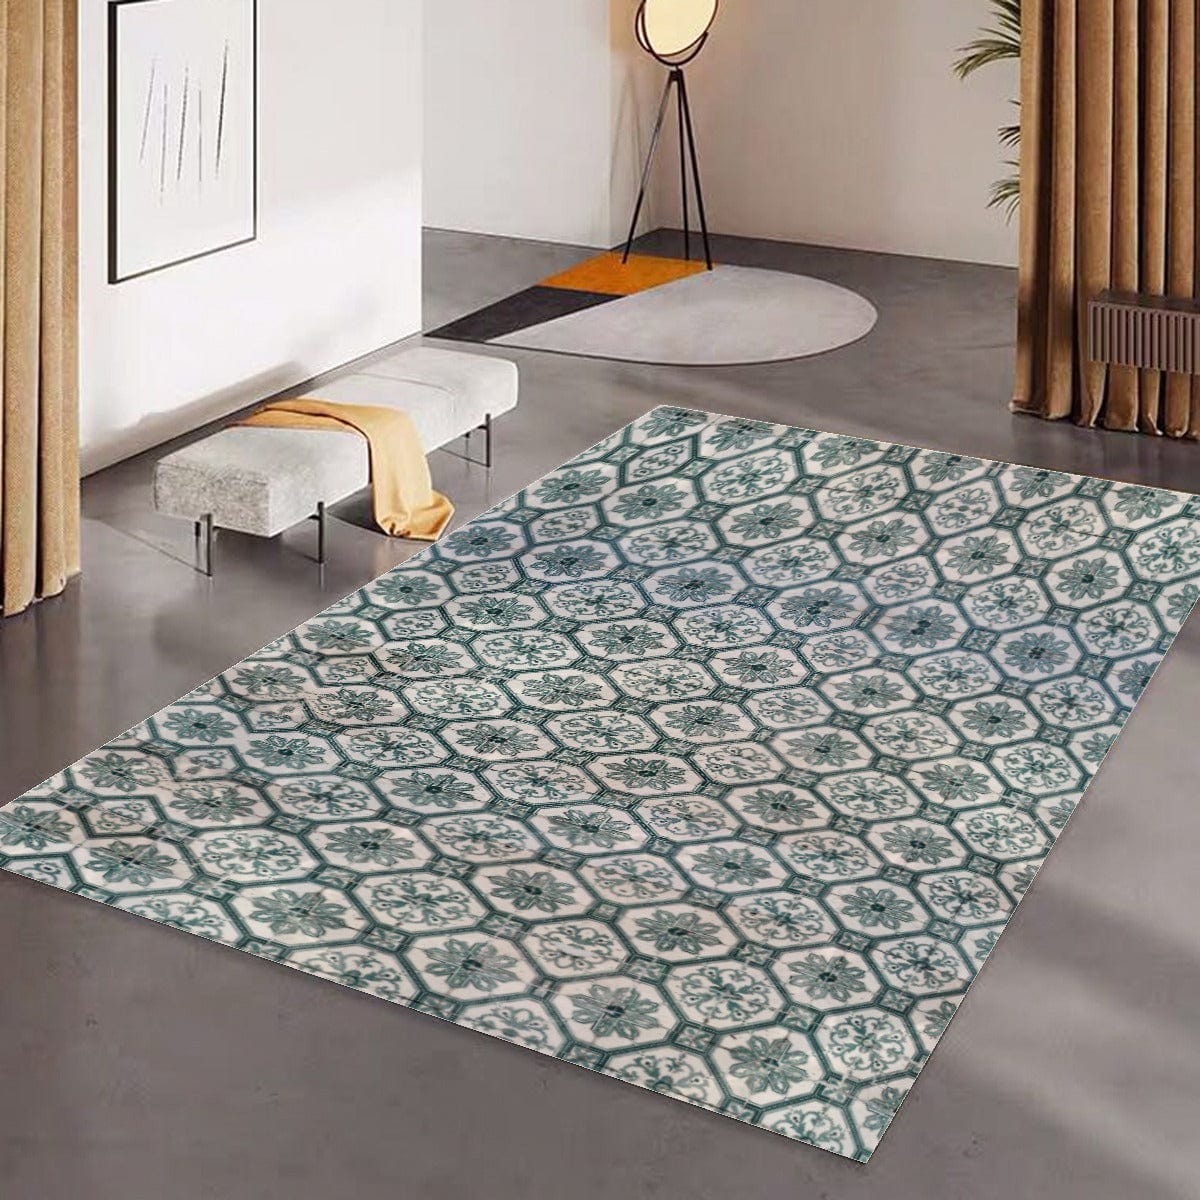 Yoycol Rug Italian Blue - Foldable Rectangular Floor Mat